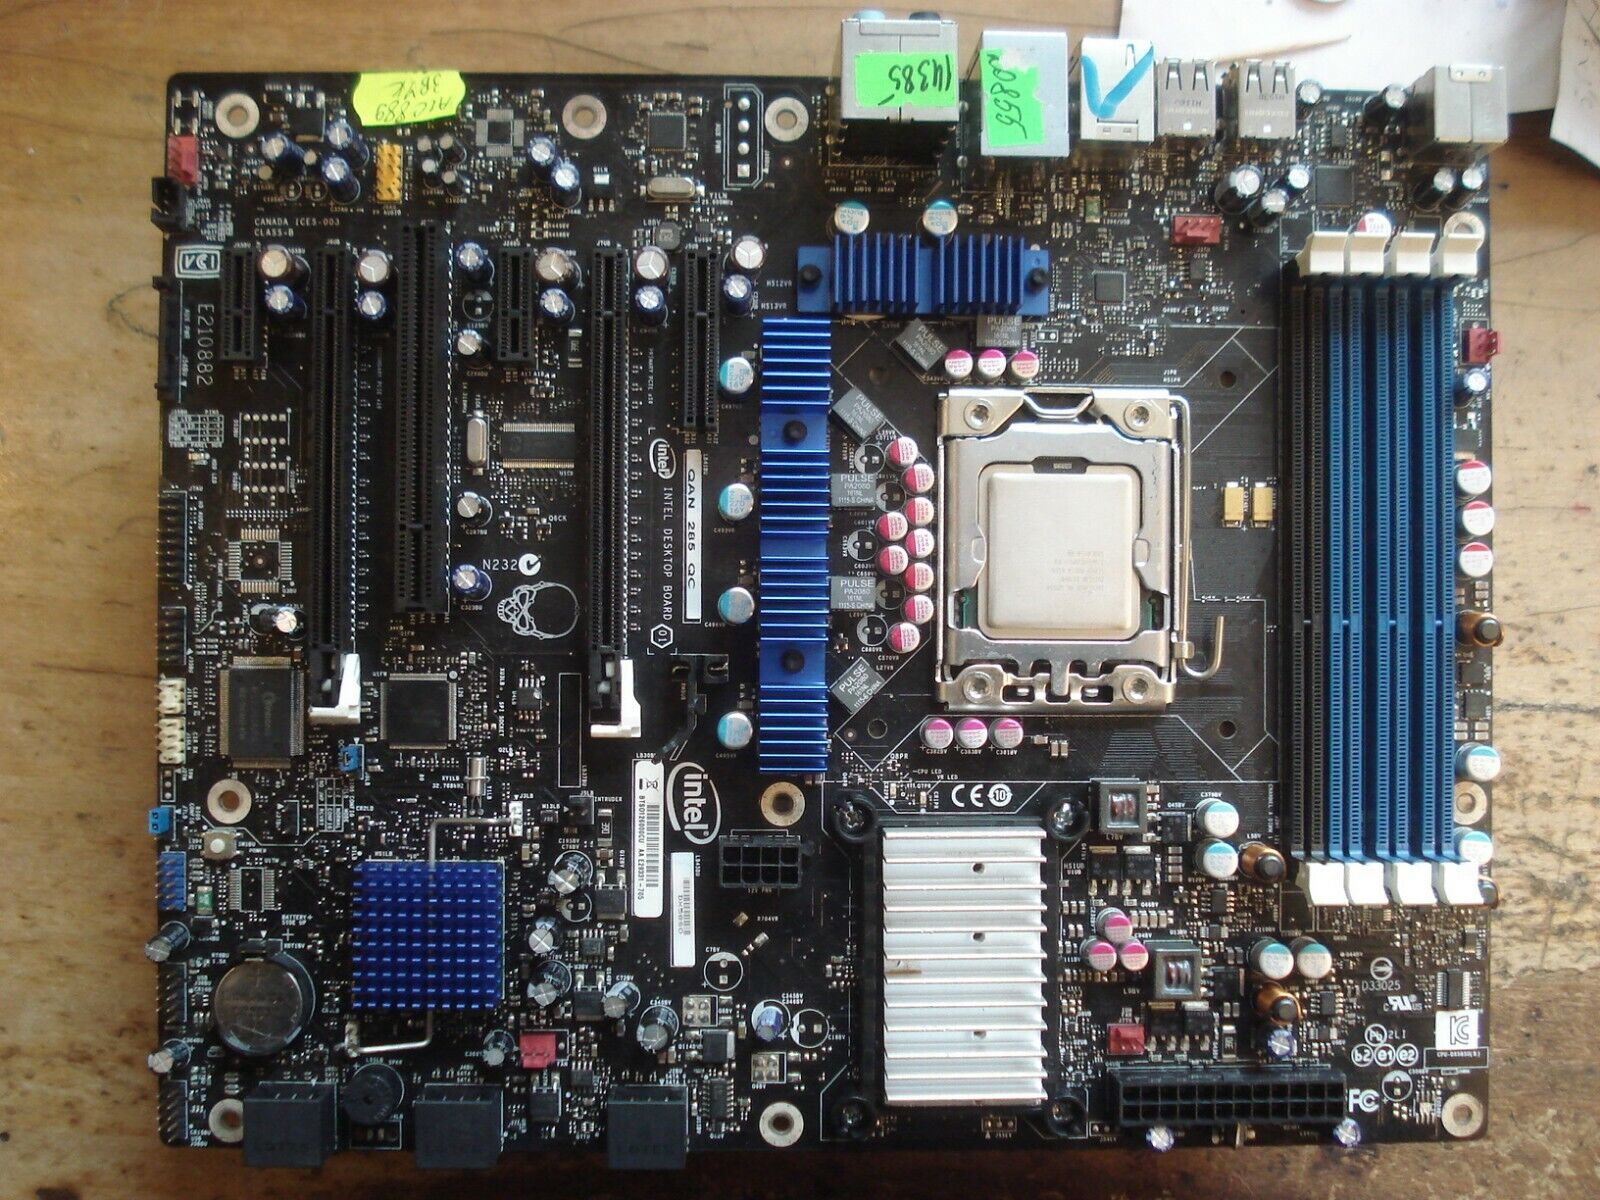 Intel DX58SO + CPU XEON W3550 + RAM 1Gb , LGA1366 Socket Motherboard